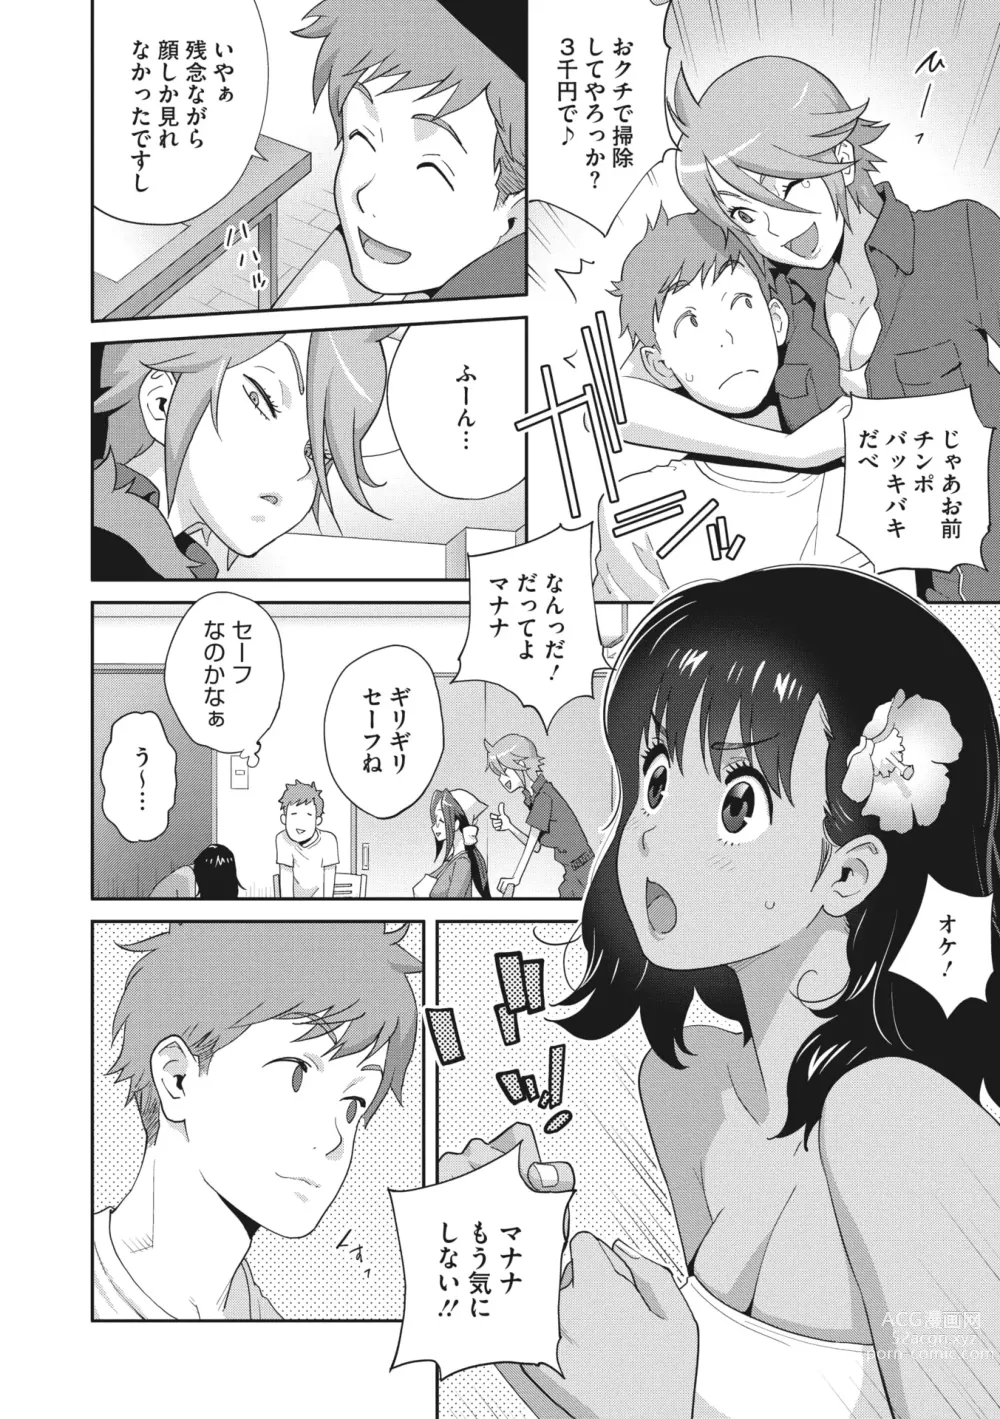 Page 4 of manga Kimama Tawawa Manana 1-4